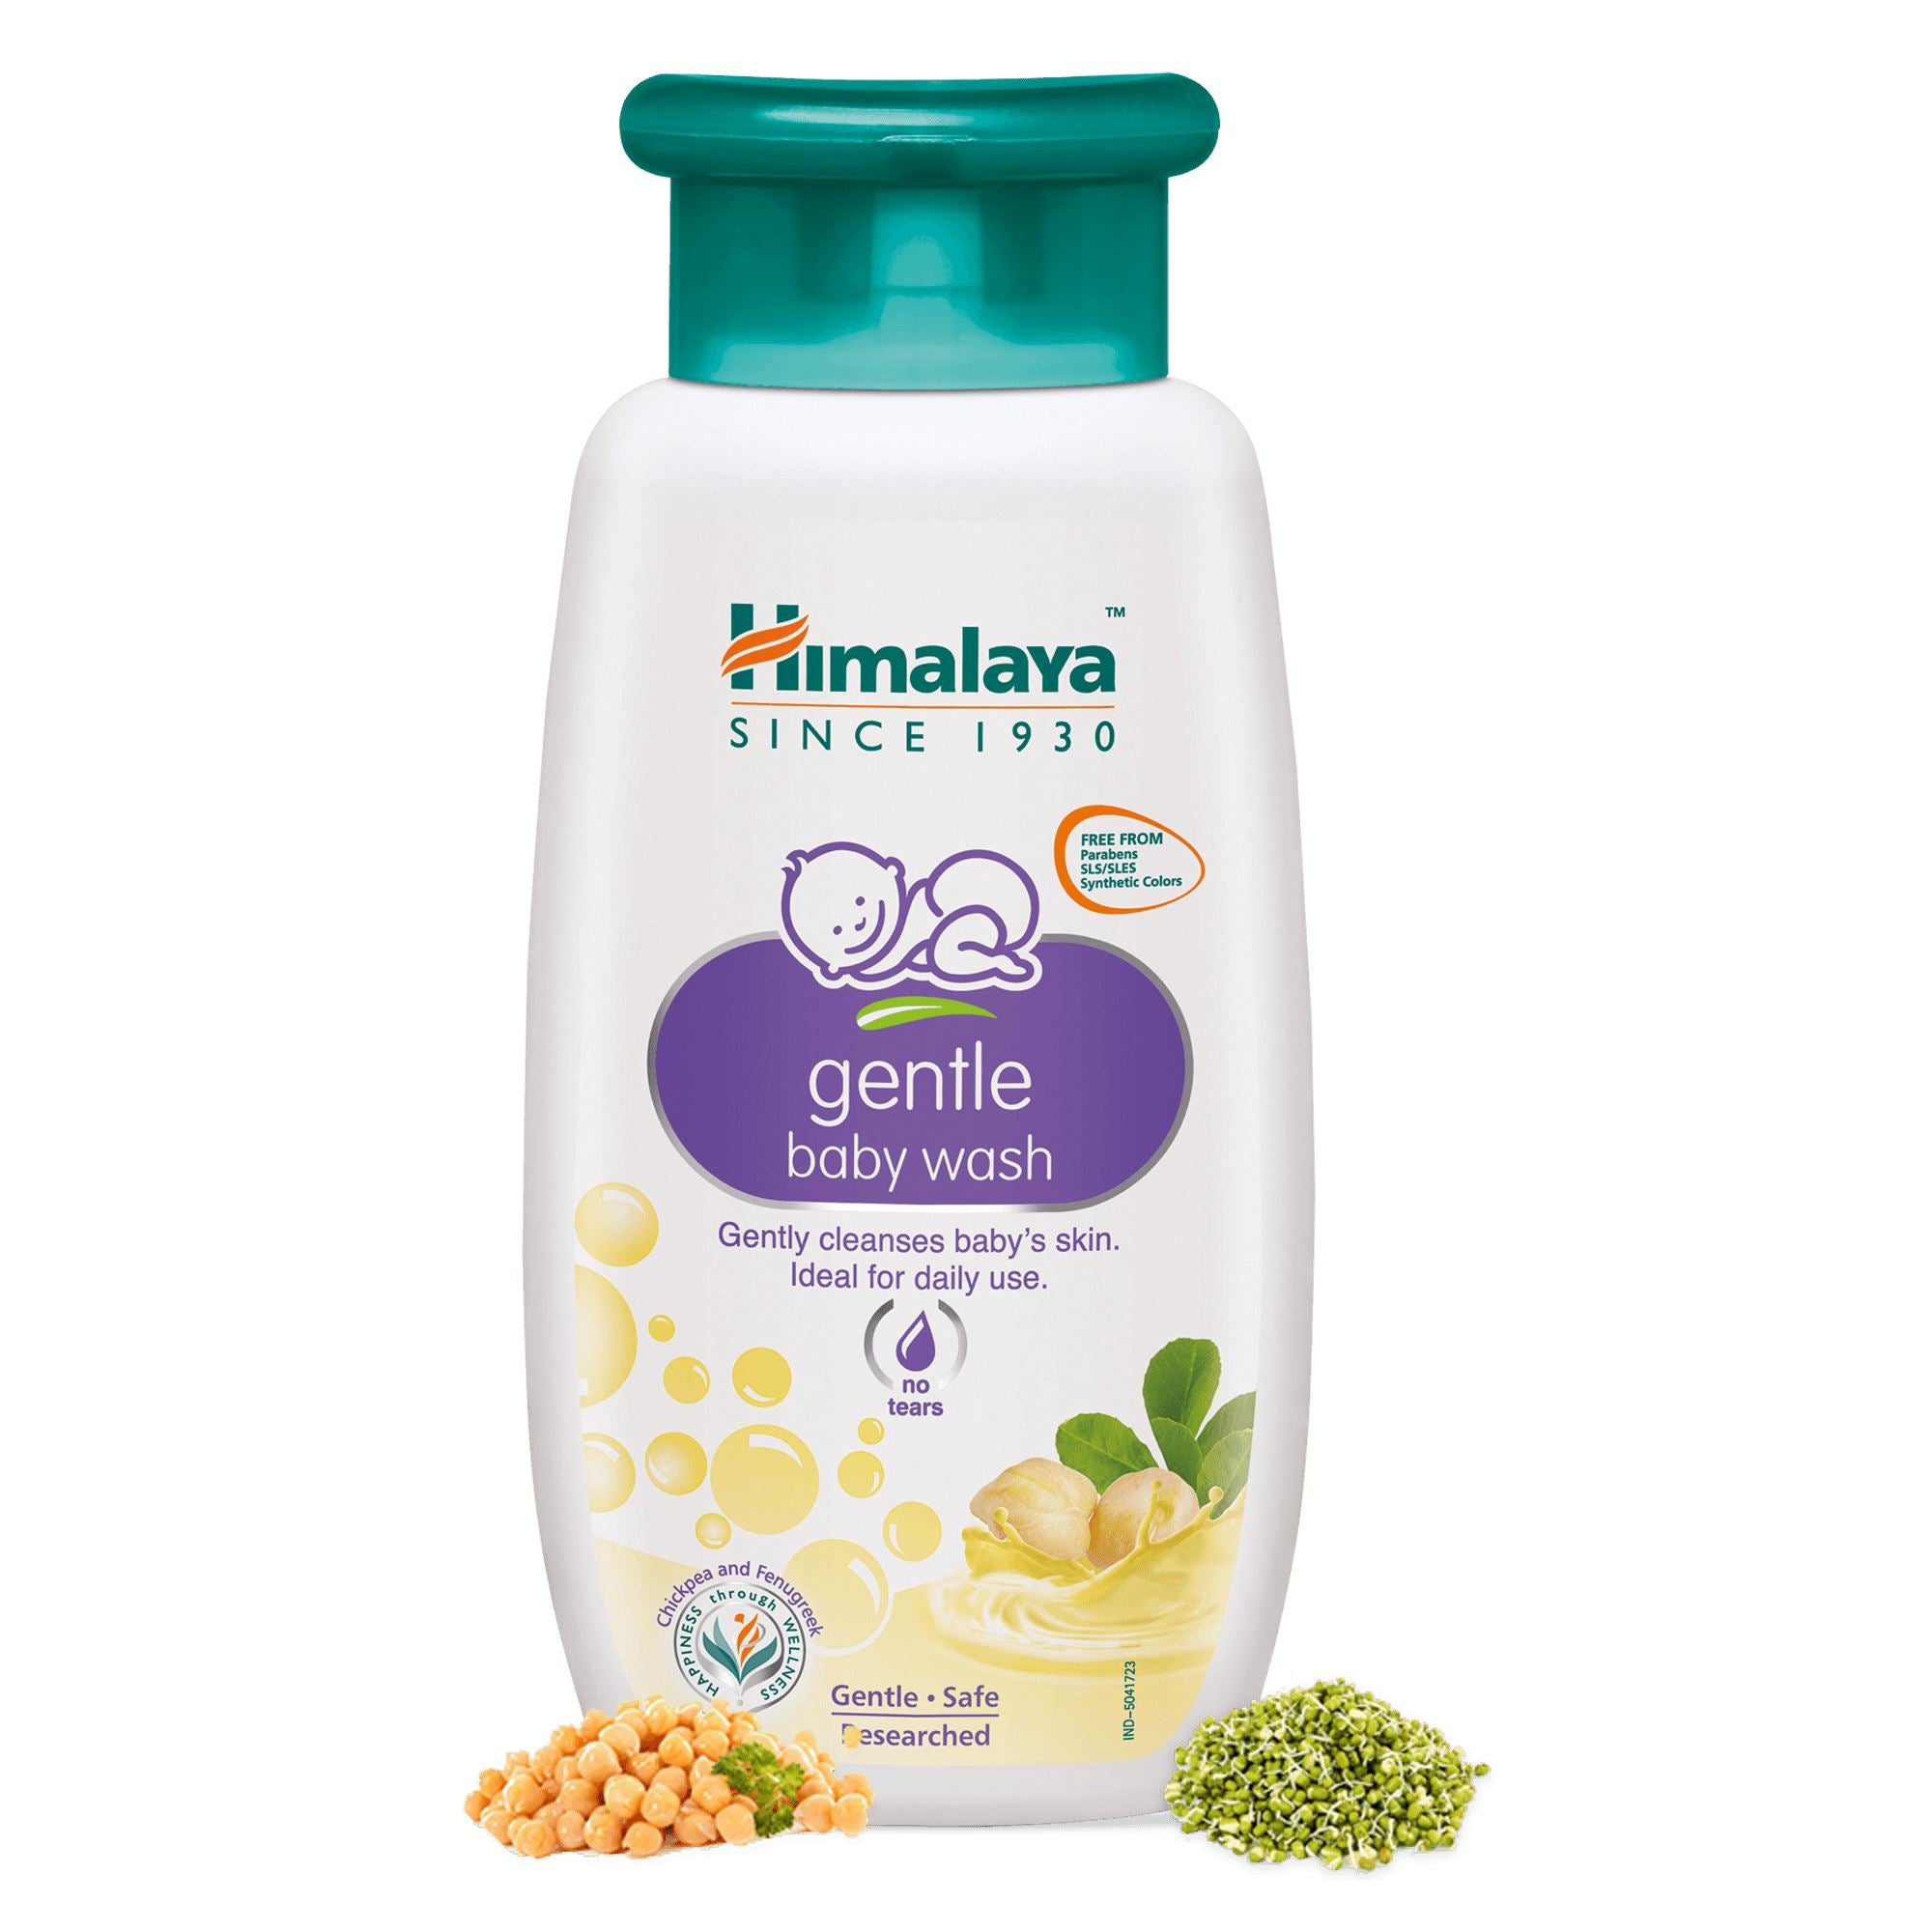 Himalaya Gentle Baby Wash 200ml- Gently cleanses baby's skin